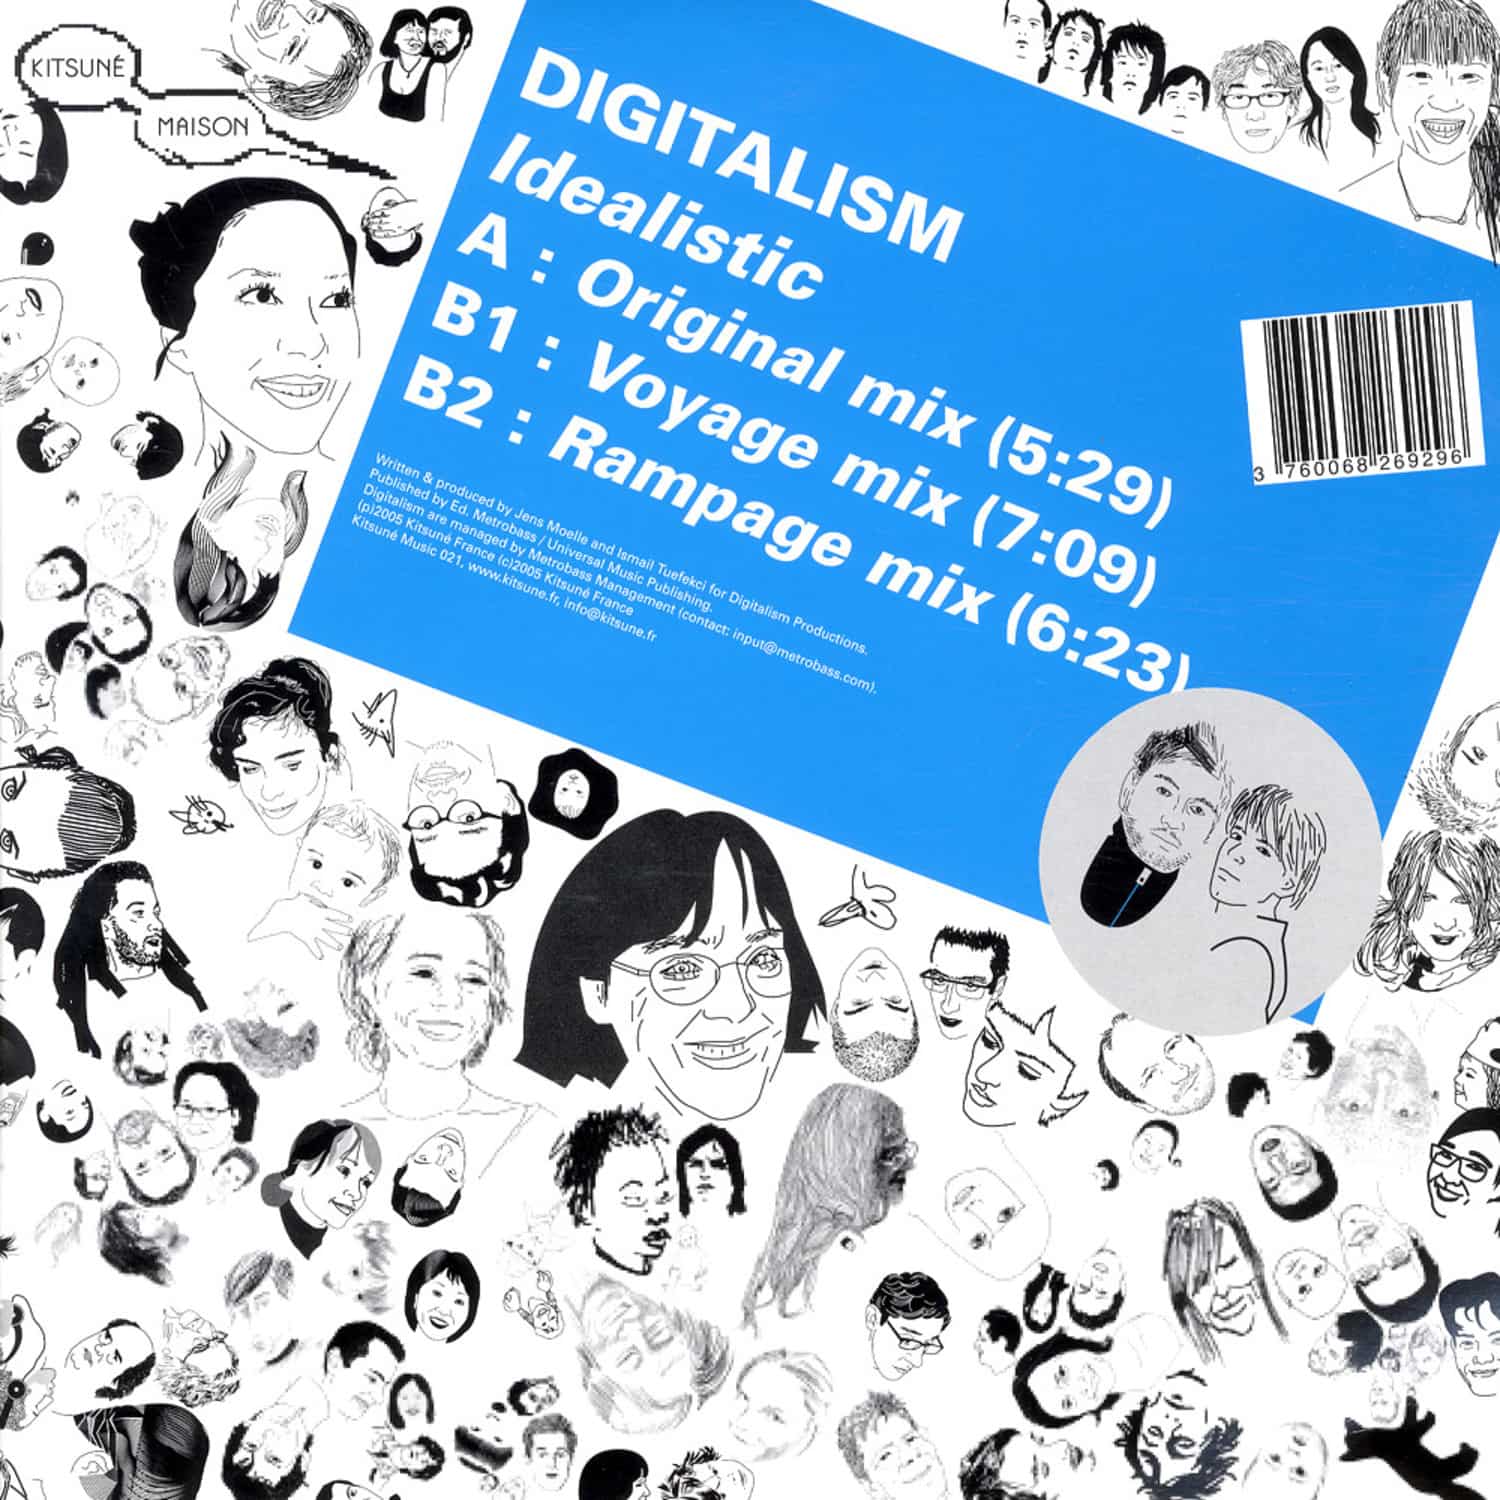 Digitalism - IDEALISTIC